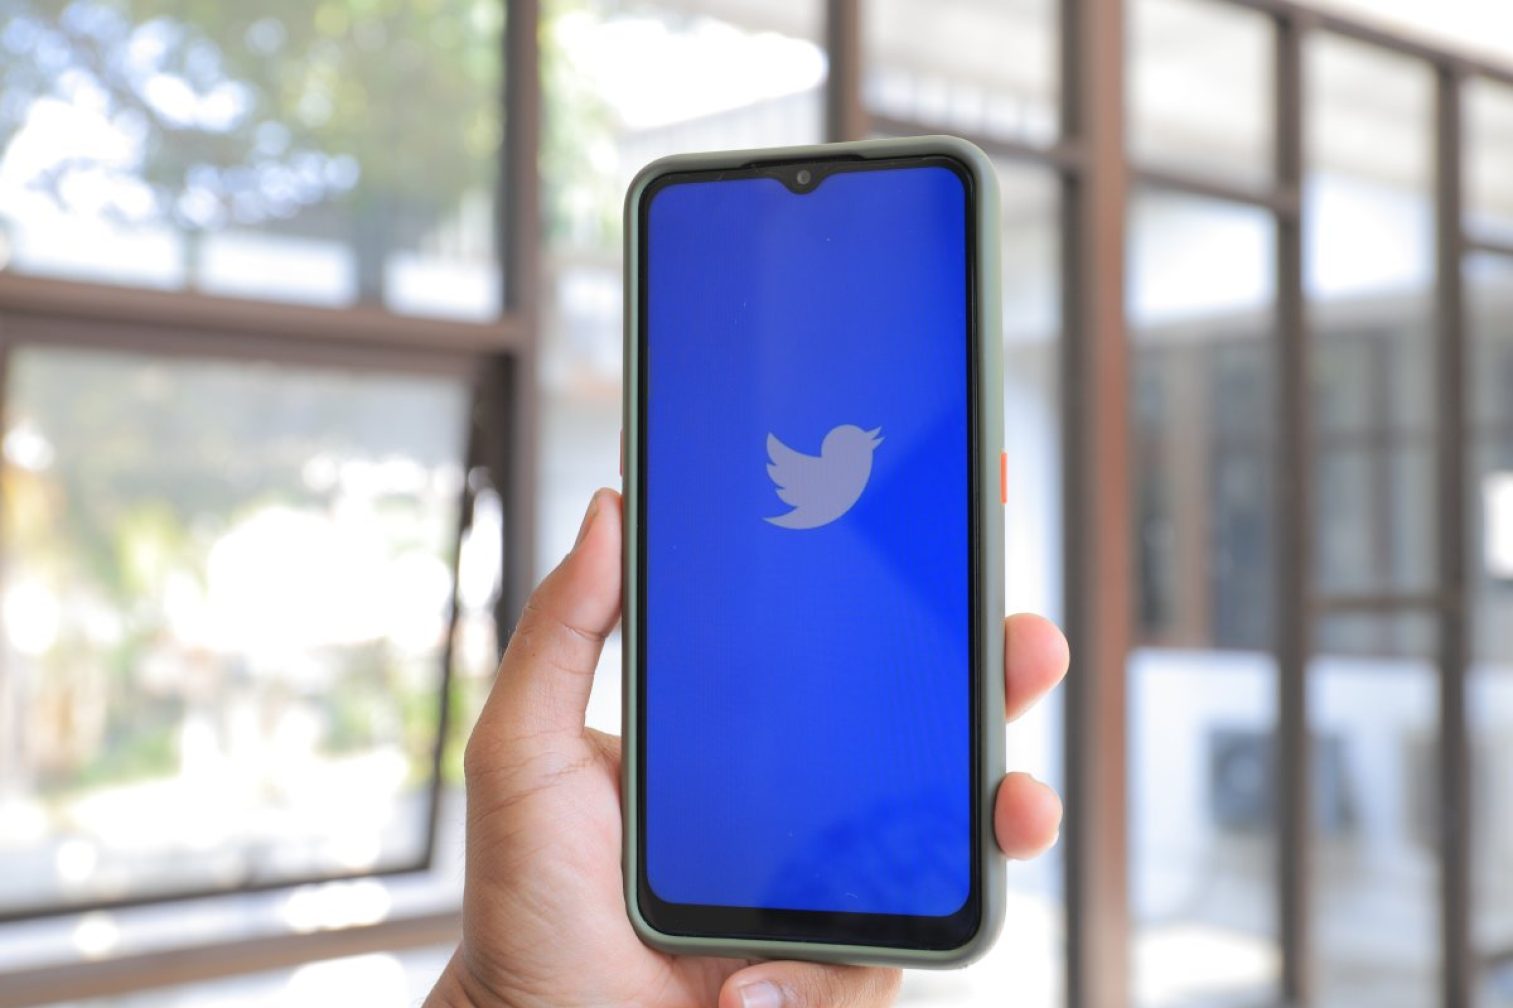 Twitter logo on smartphone screen